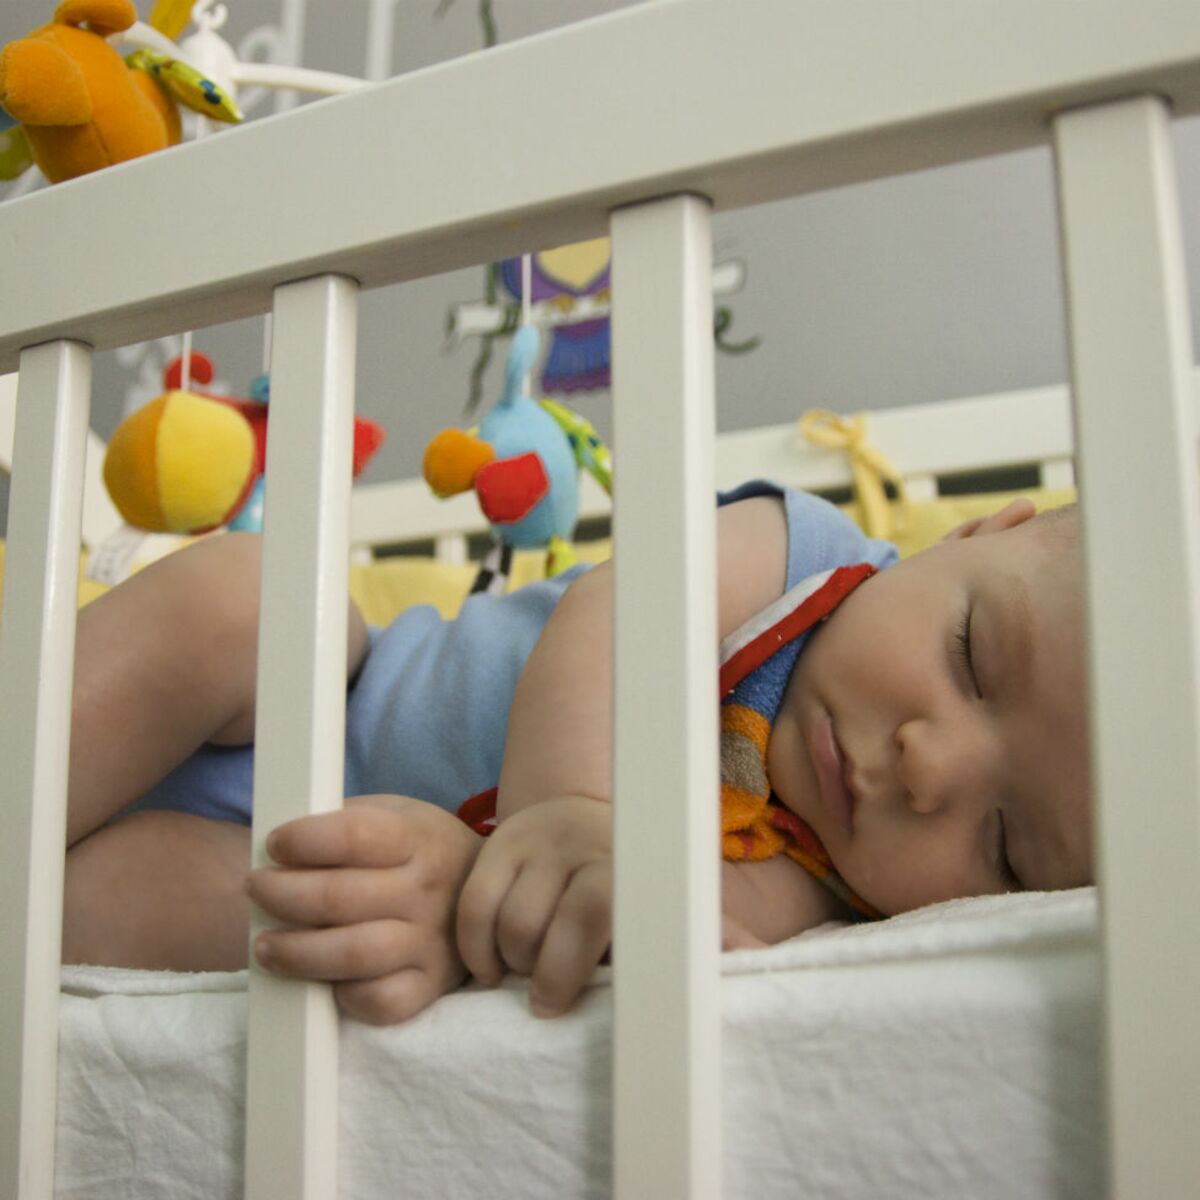 Aider un bébé à dormir : l'astuce étonnante d'une maman - Terrafemina